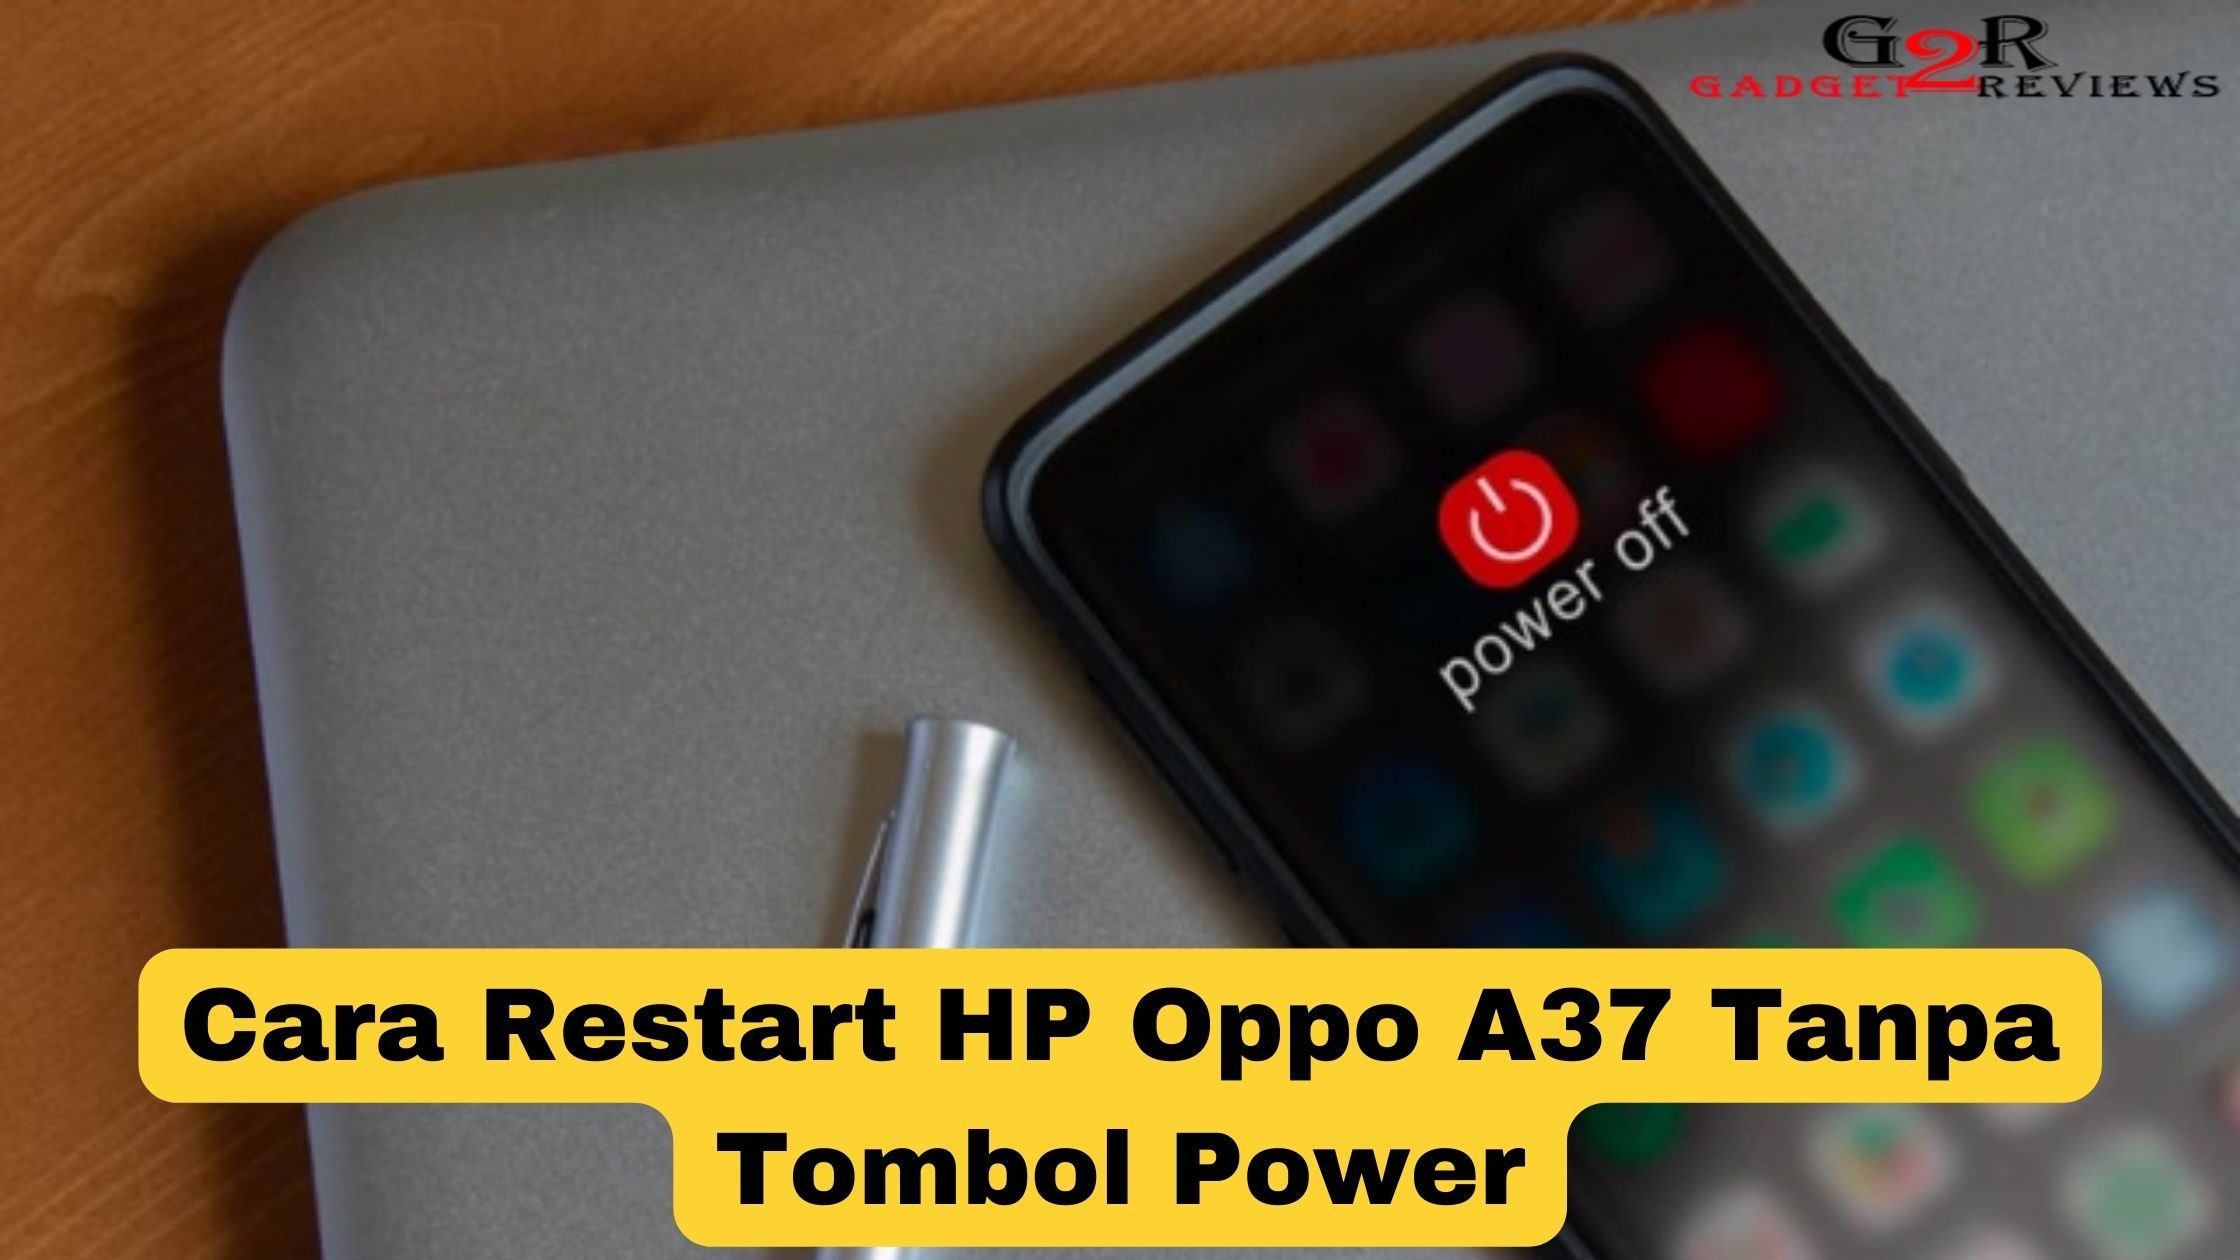 Cara Restart HP Oppo A37 Tanpa Tombol Power